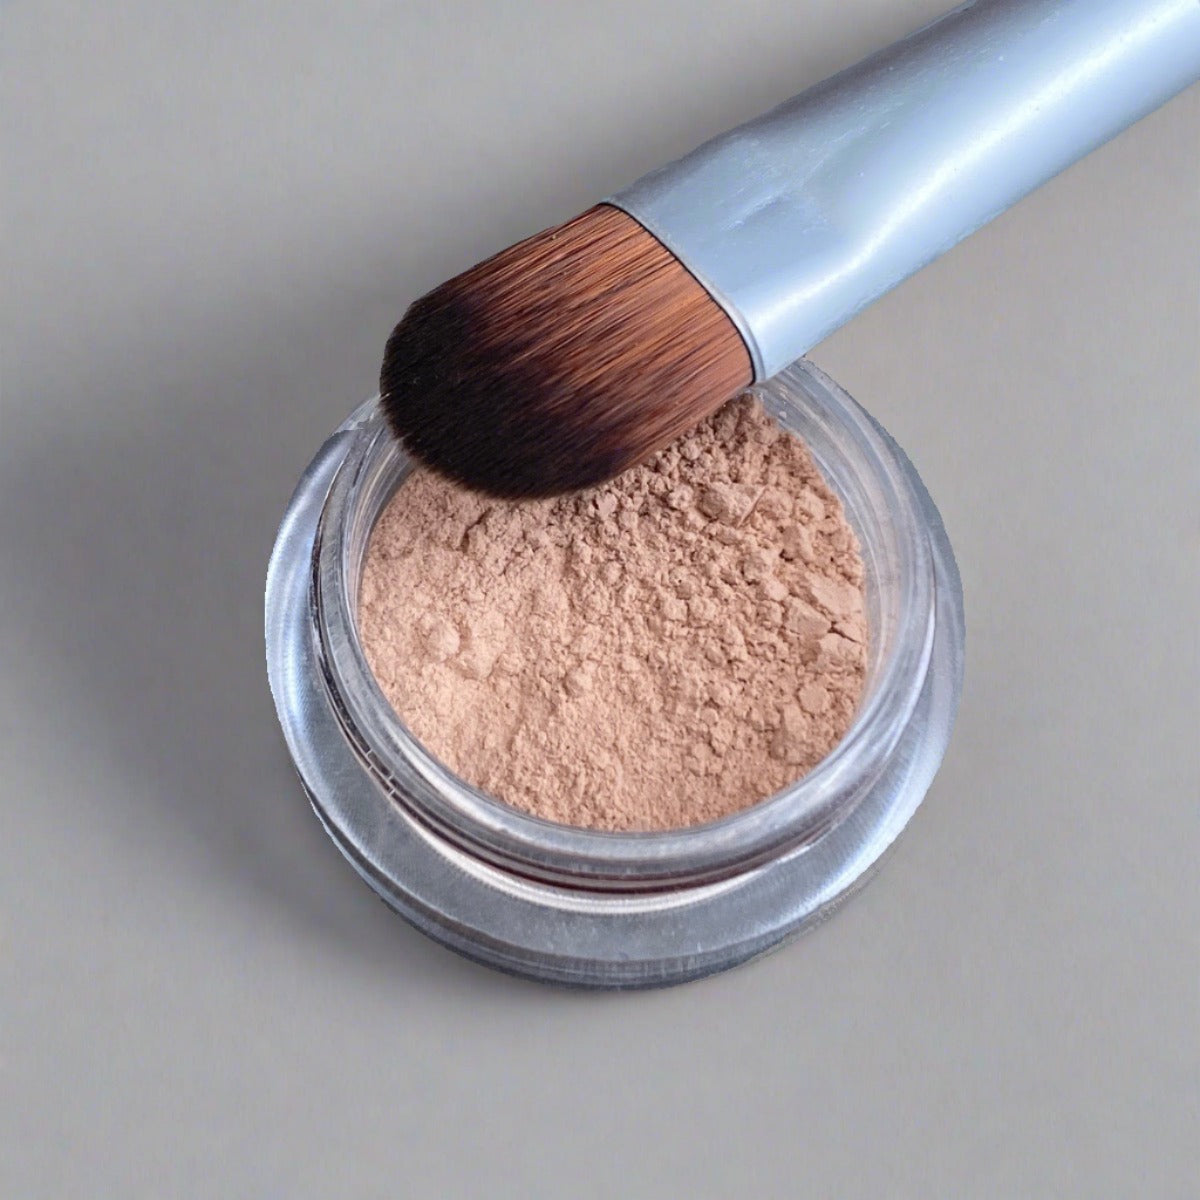 Small jar of concealer powder alongside small, dense, packing makeup brush 